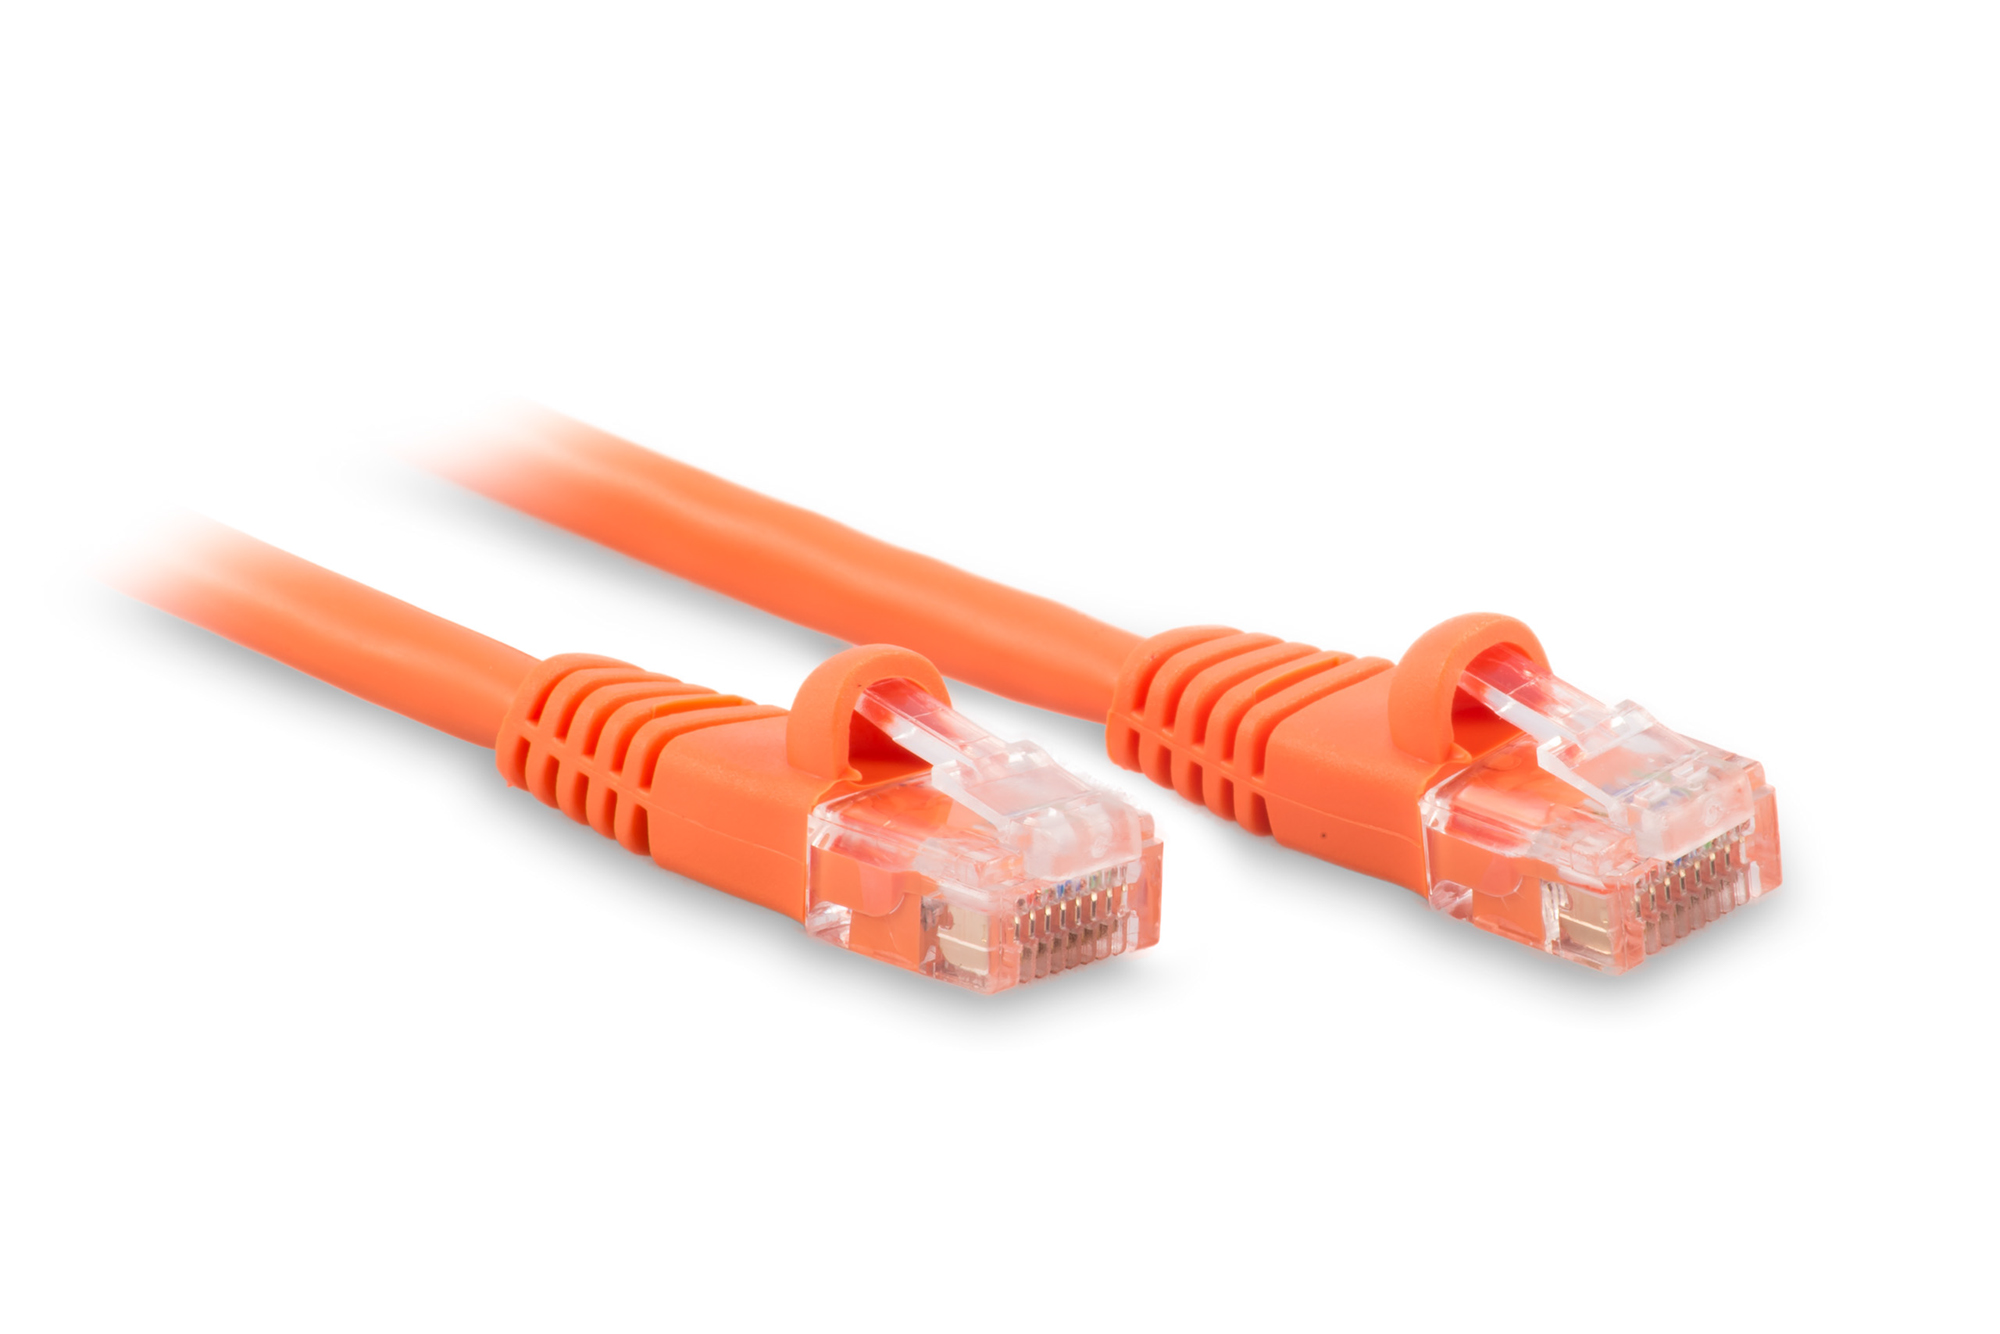 100ft Cat6 Ethernet Patch Cable - Orange Color - Snagless Boot, Stranded, RJ45, 550Mhz, 24AWG